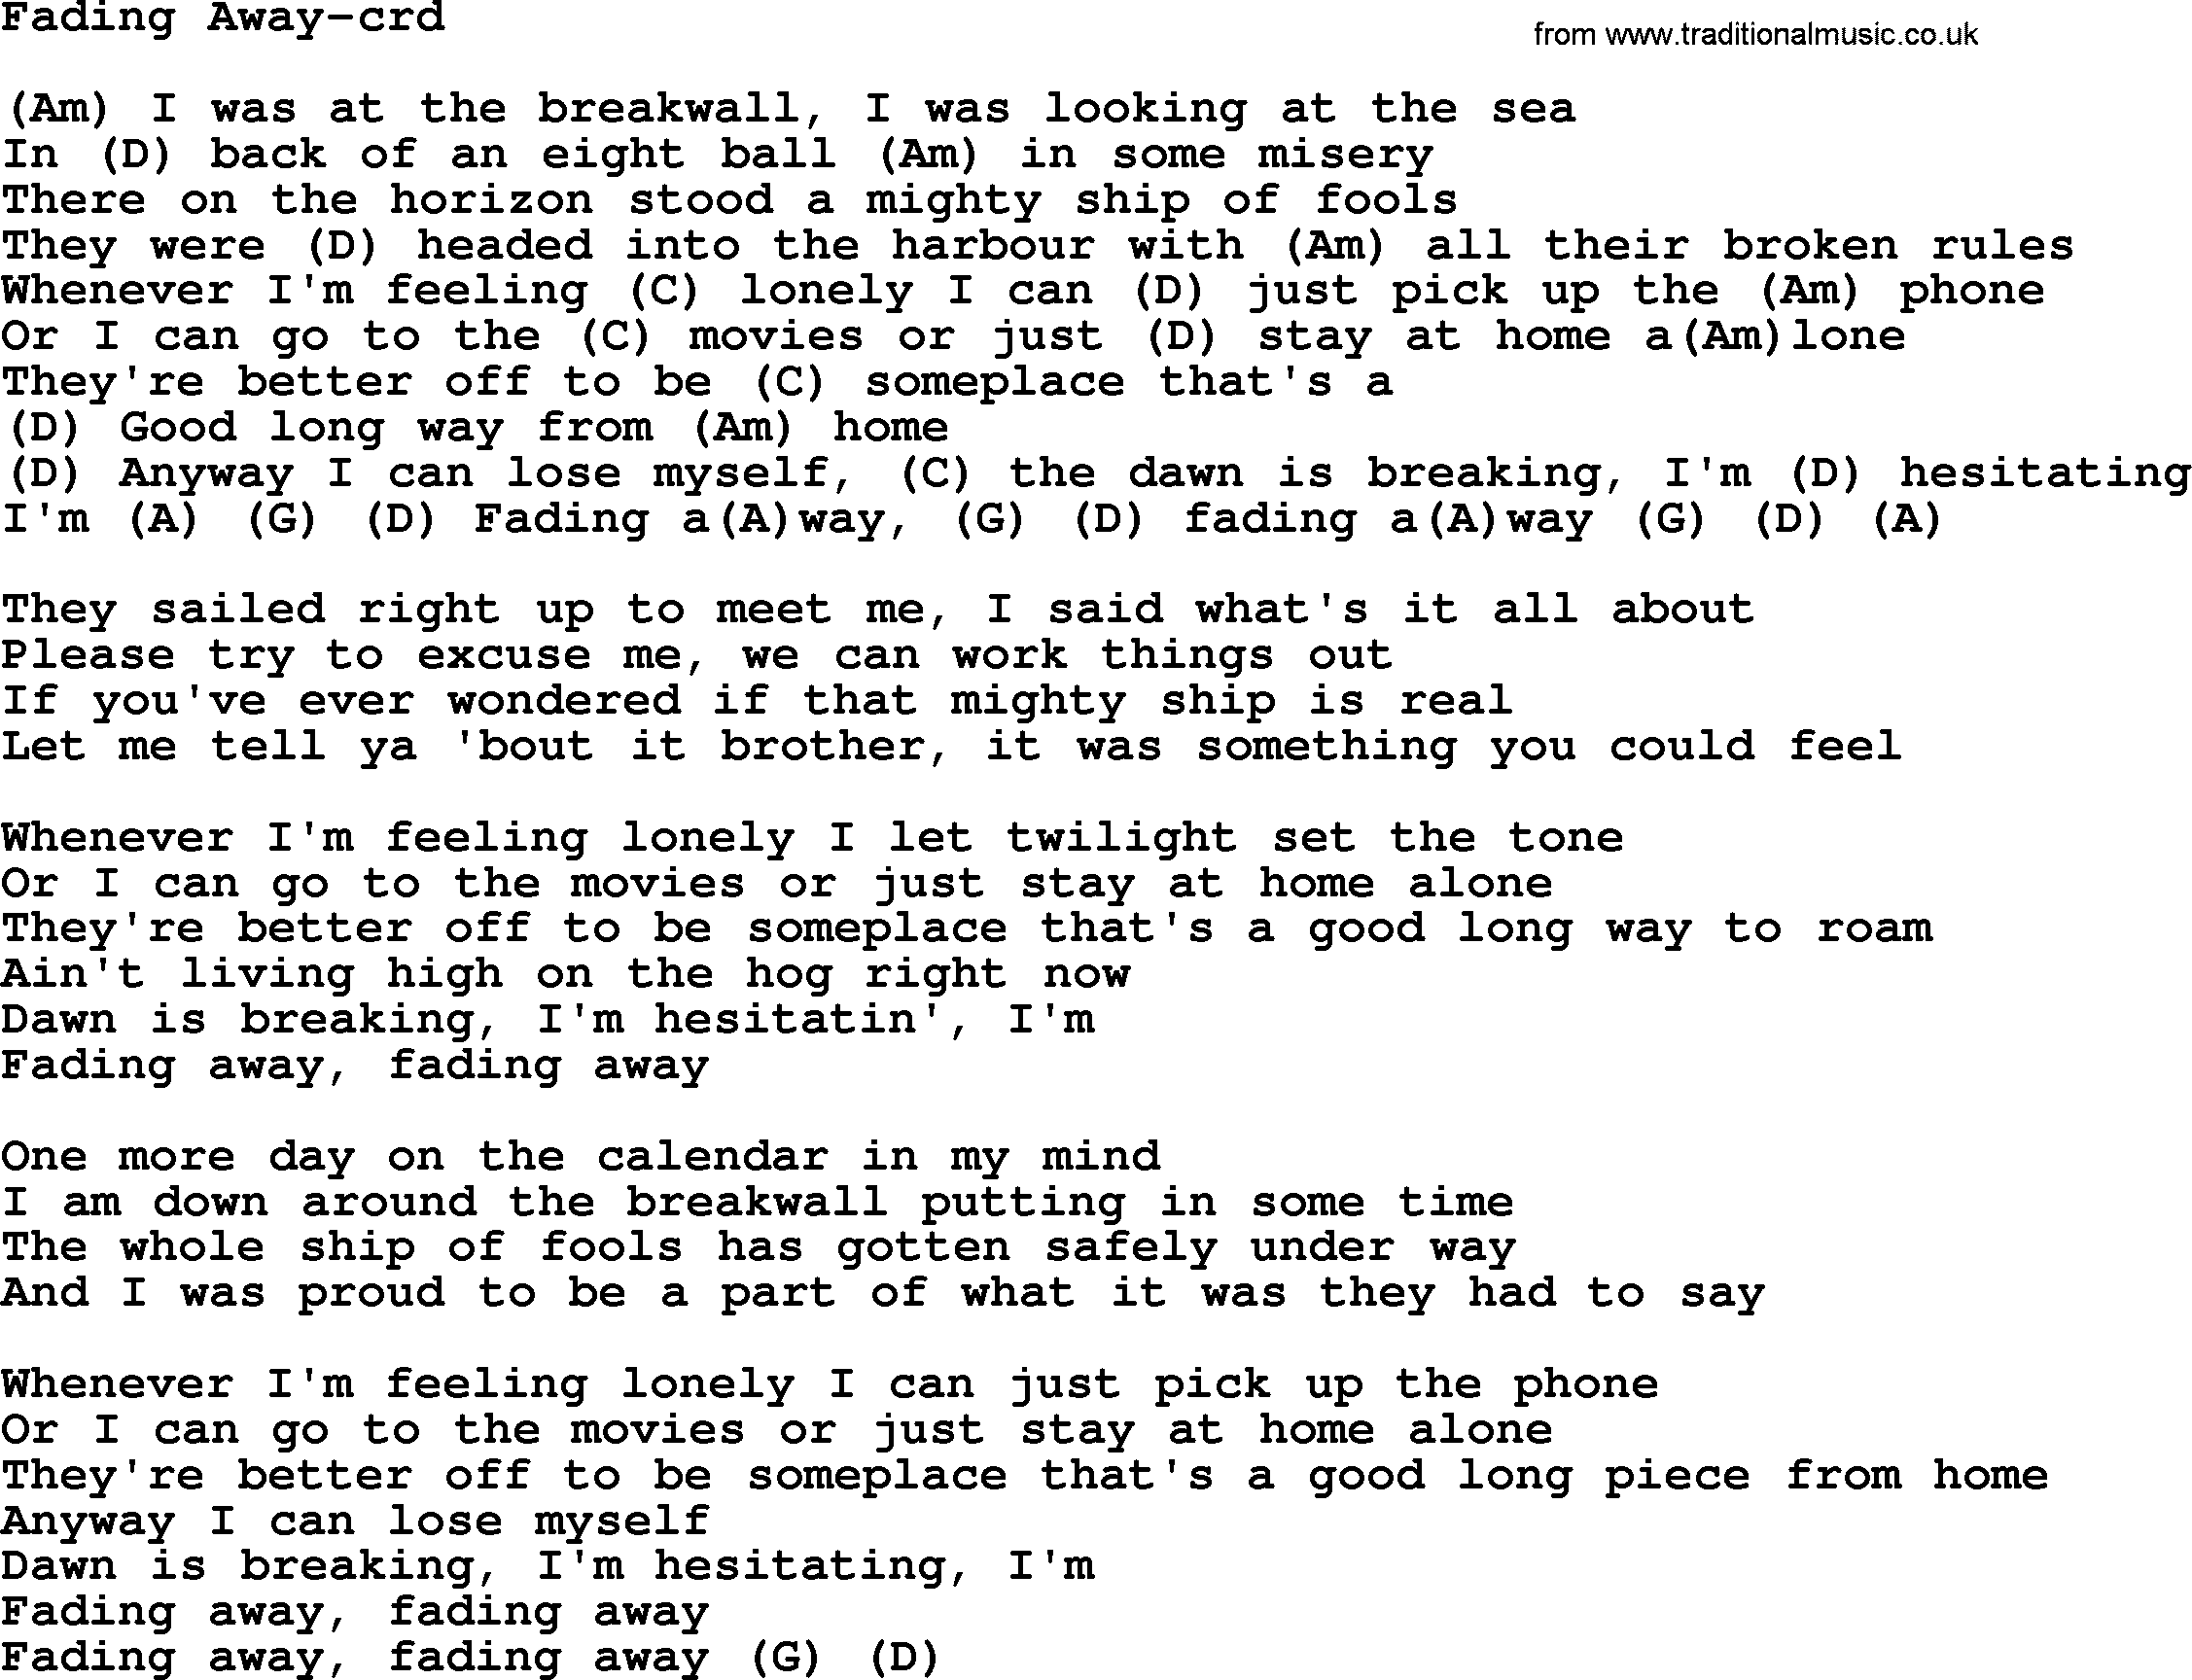 Gordon Lightfoot song Fading Away, lyrics and chords